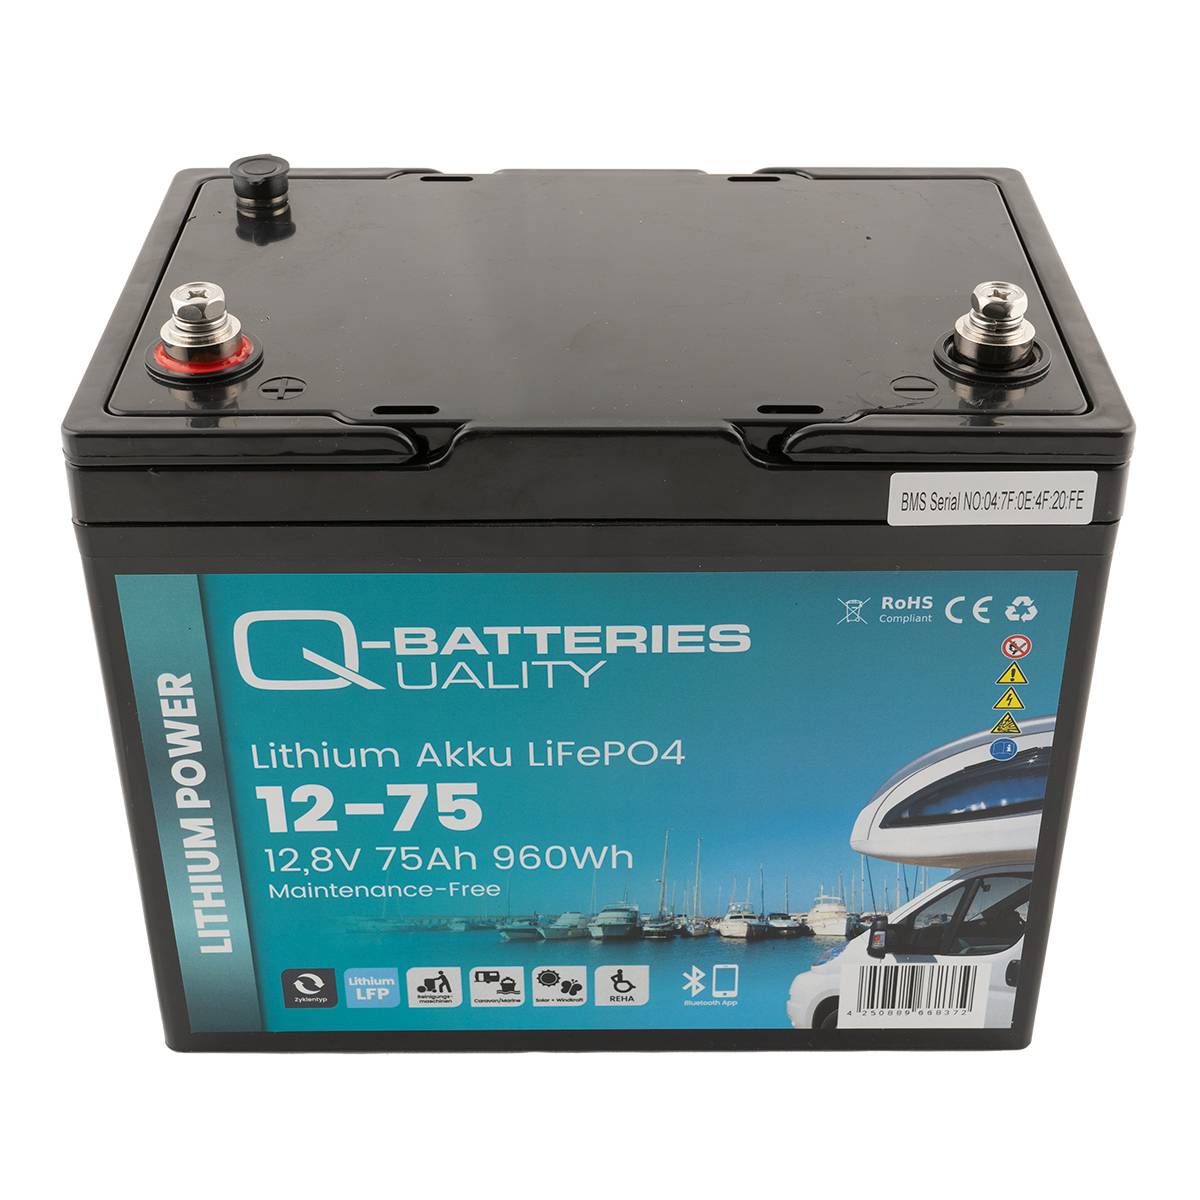 Q-Batteries Lithium Akku 12-75 12,8V 75Ah 960Wh LiFePO4 Batterie mit Bluetooth